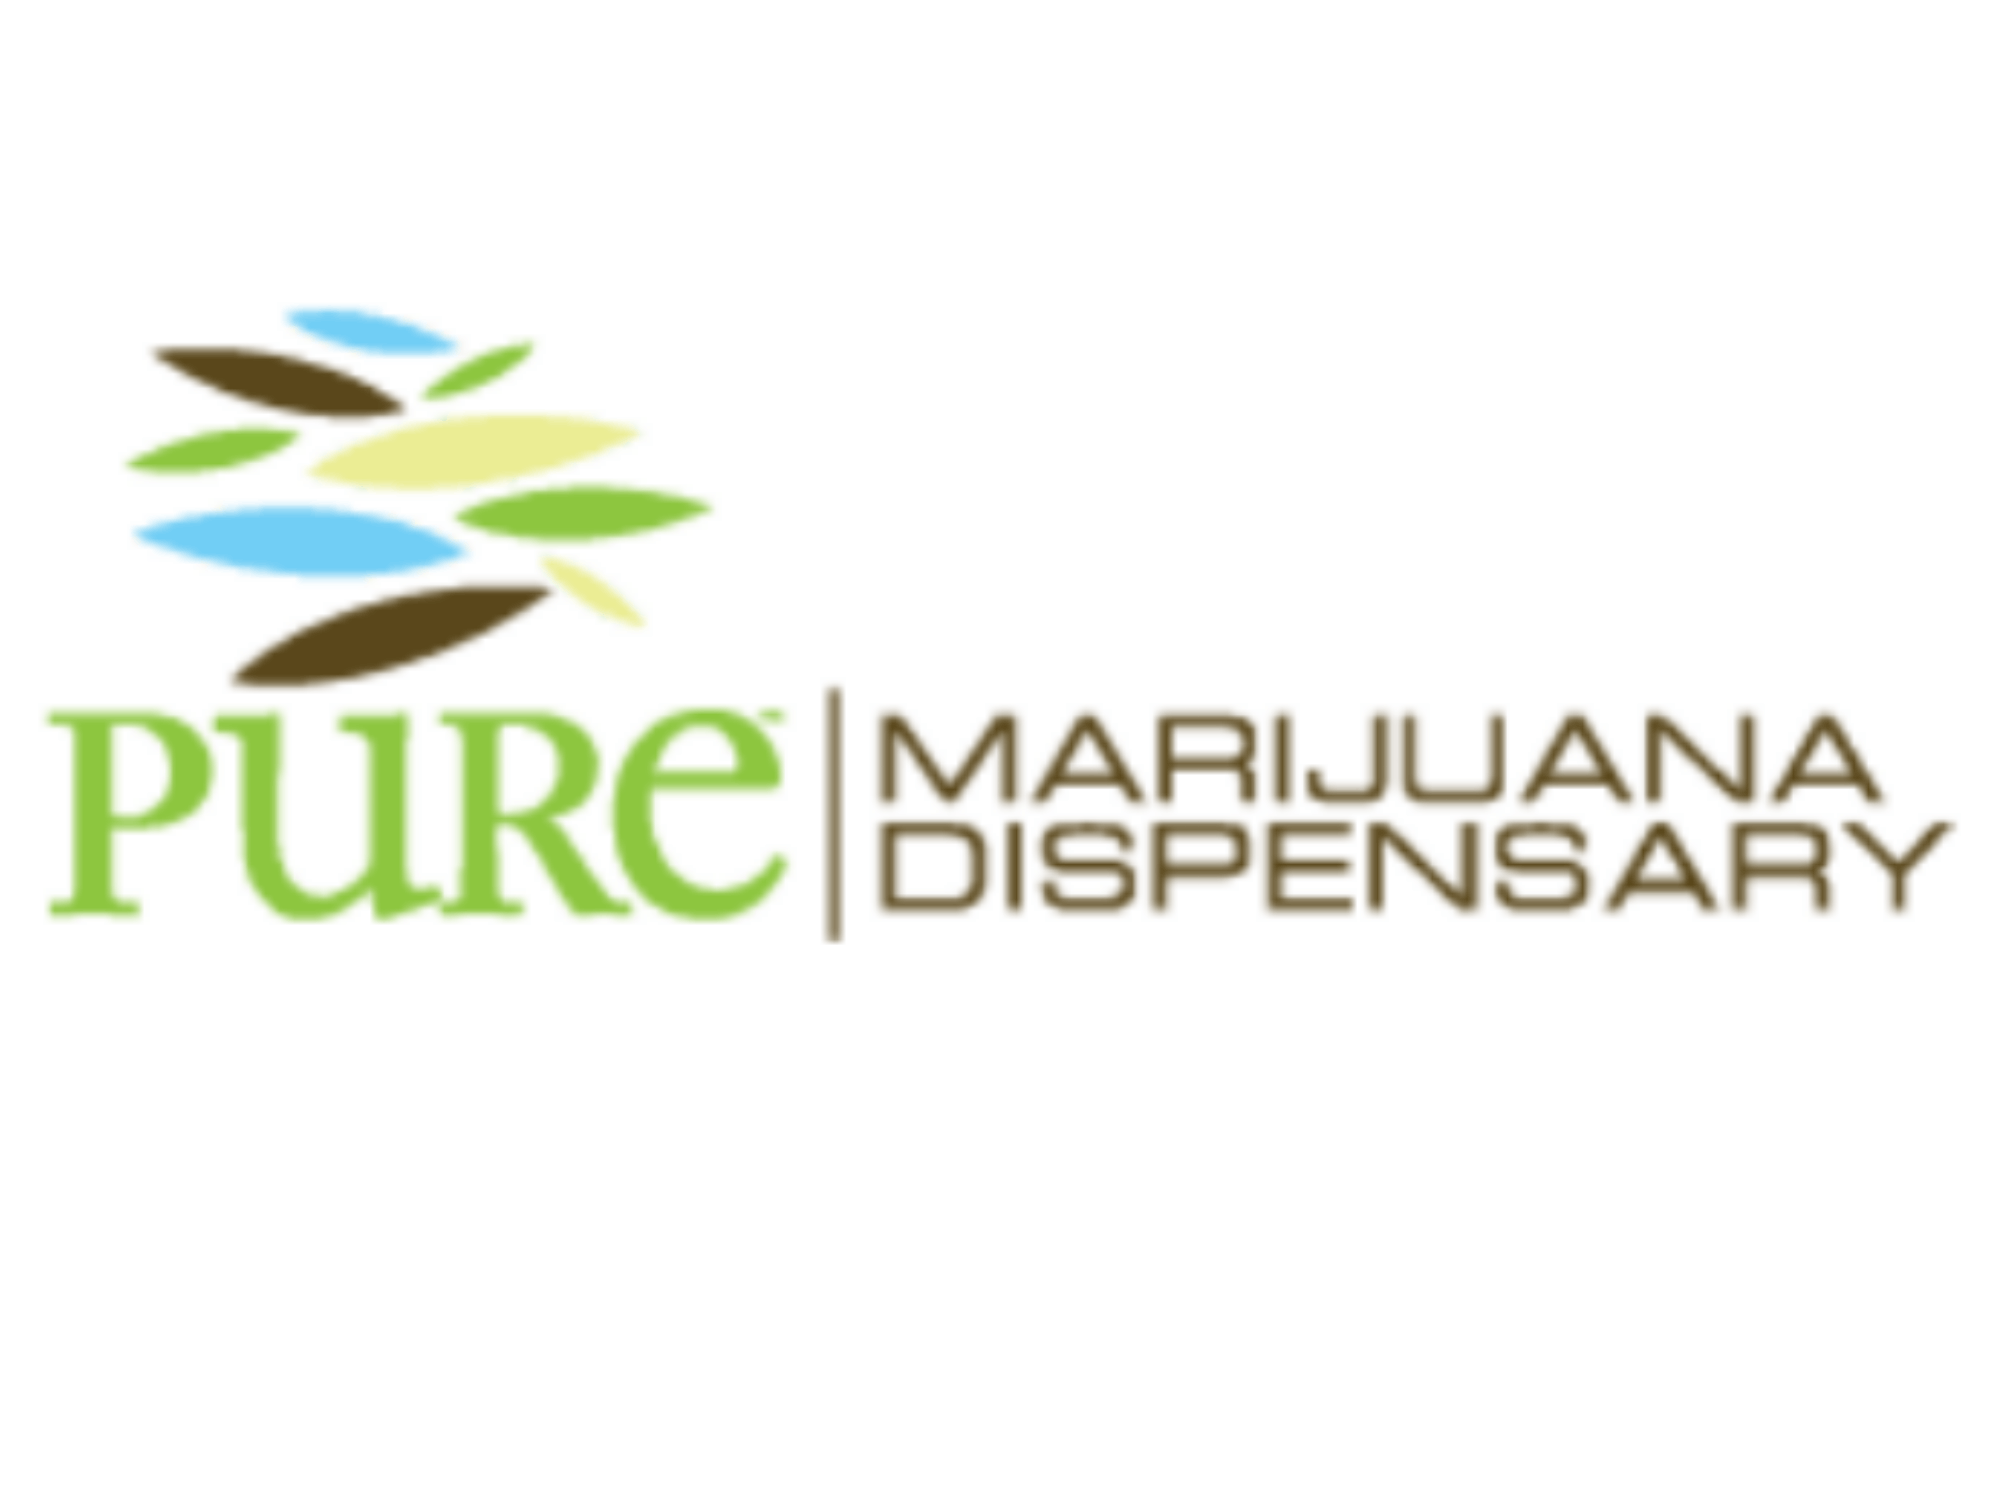 Pure Marijuana Dispensary - Logo